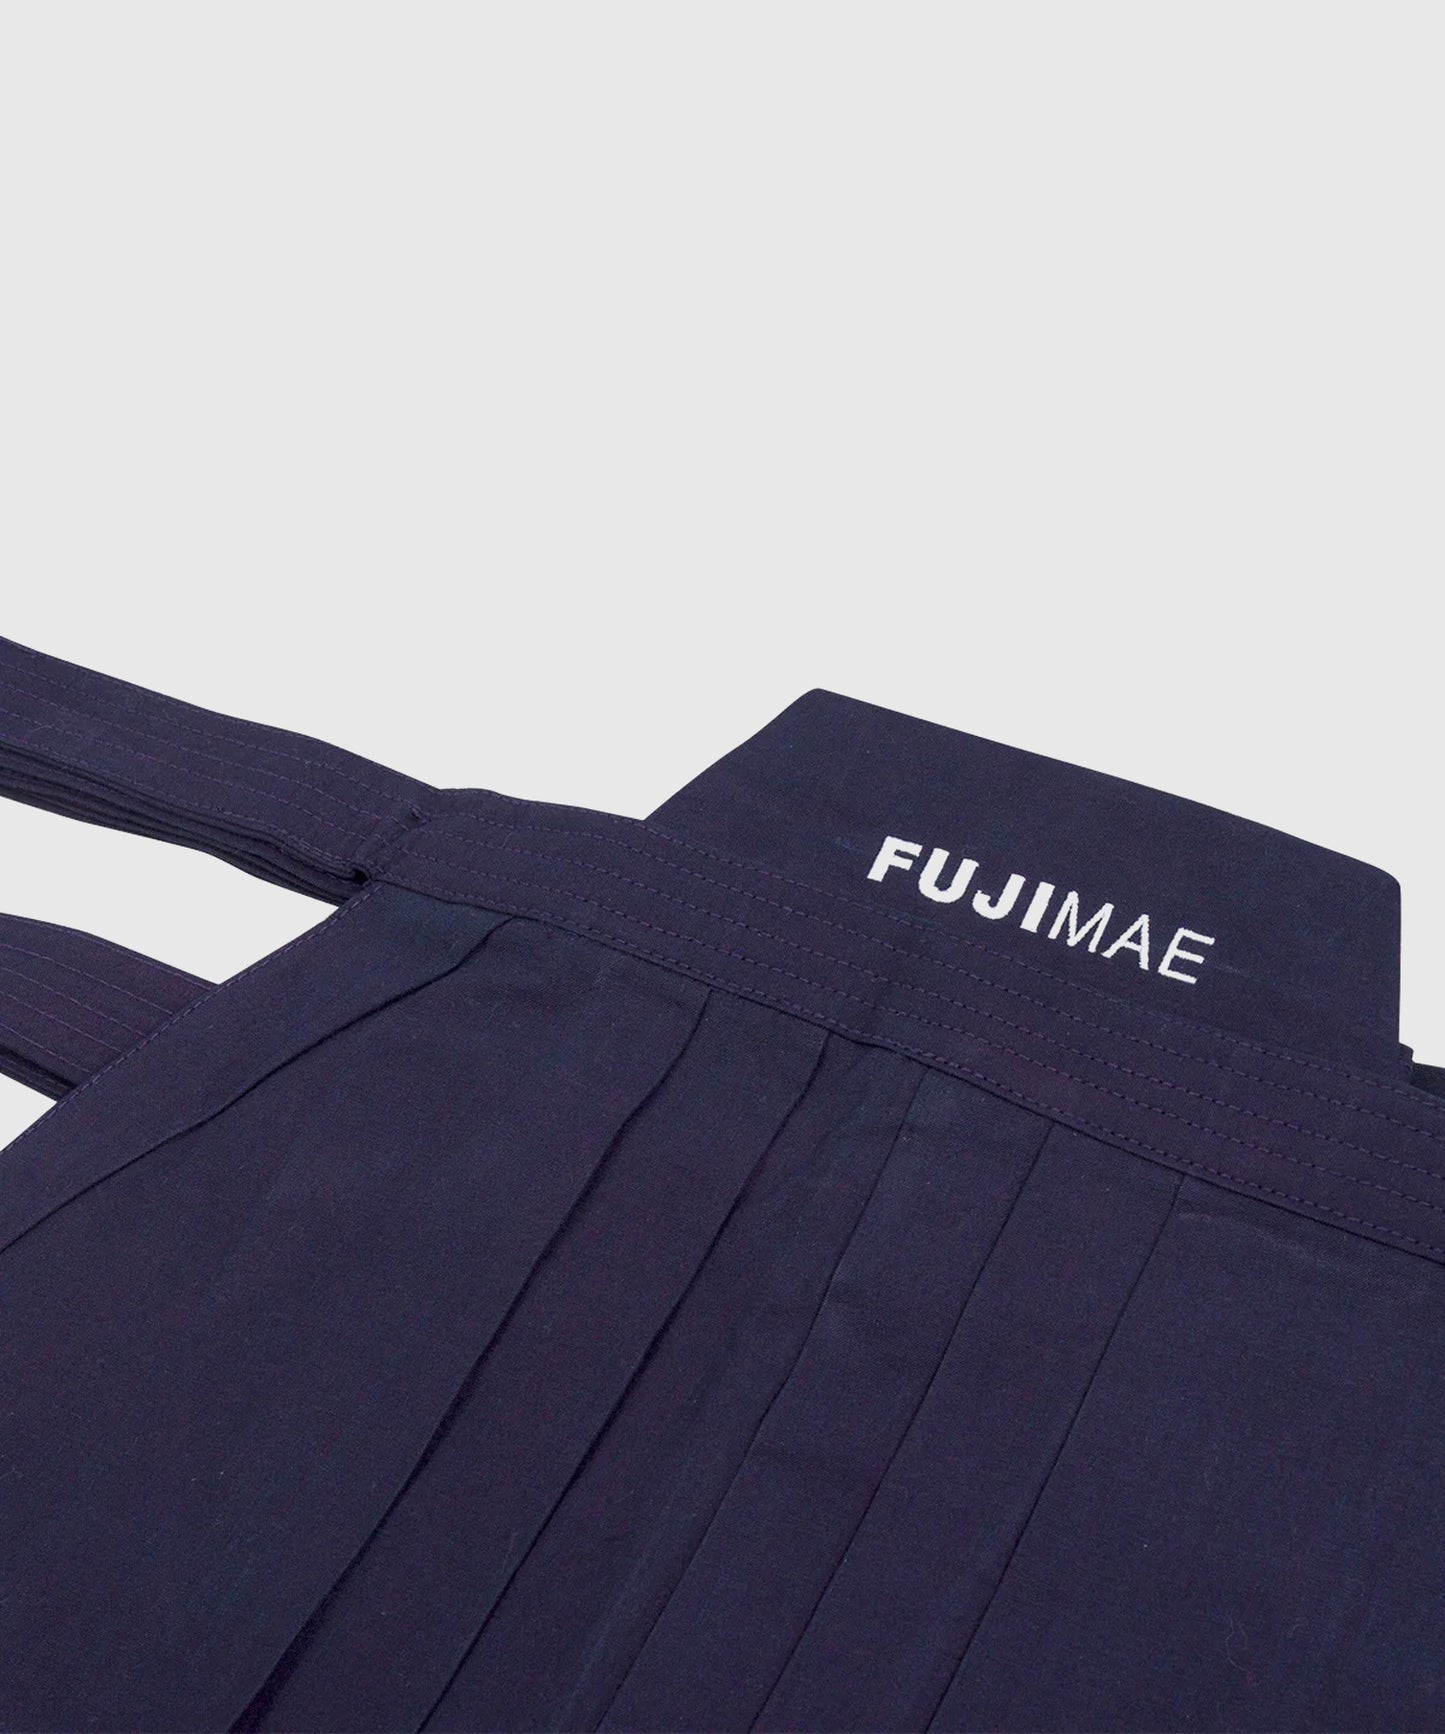 Hakama Fuji Mae - Baumwolle Polyester - Blau